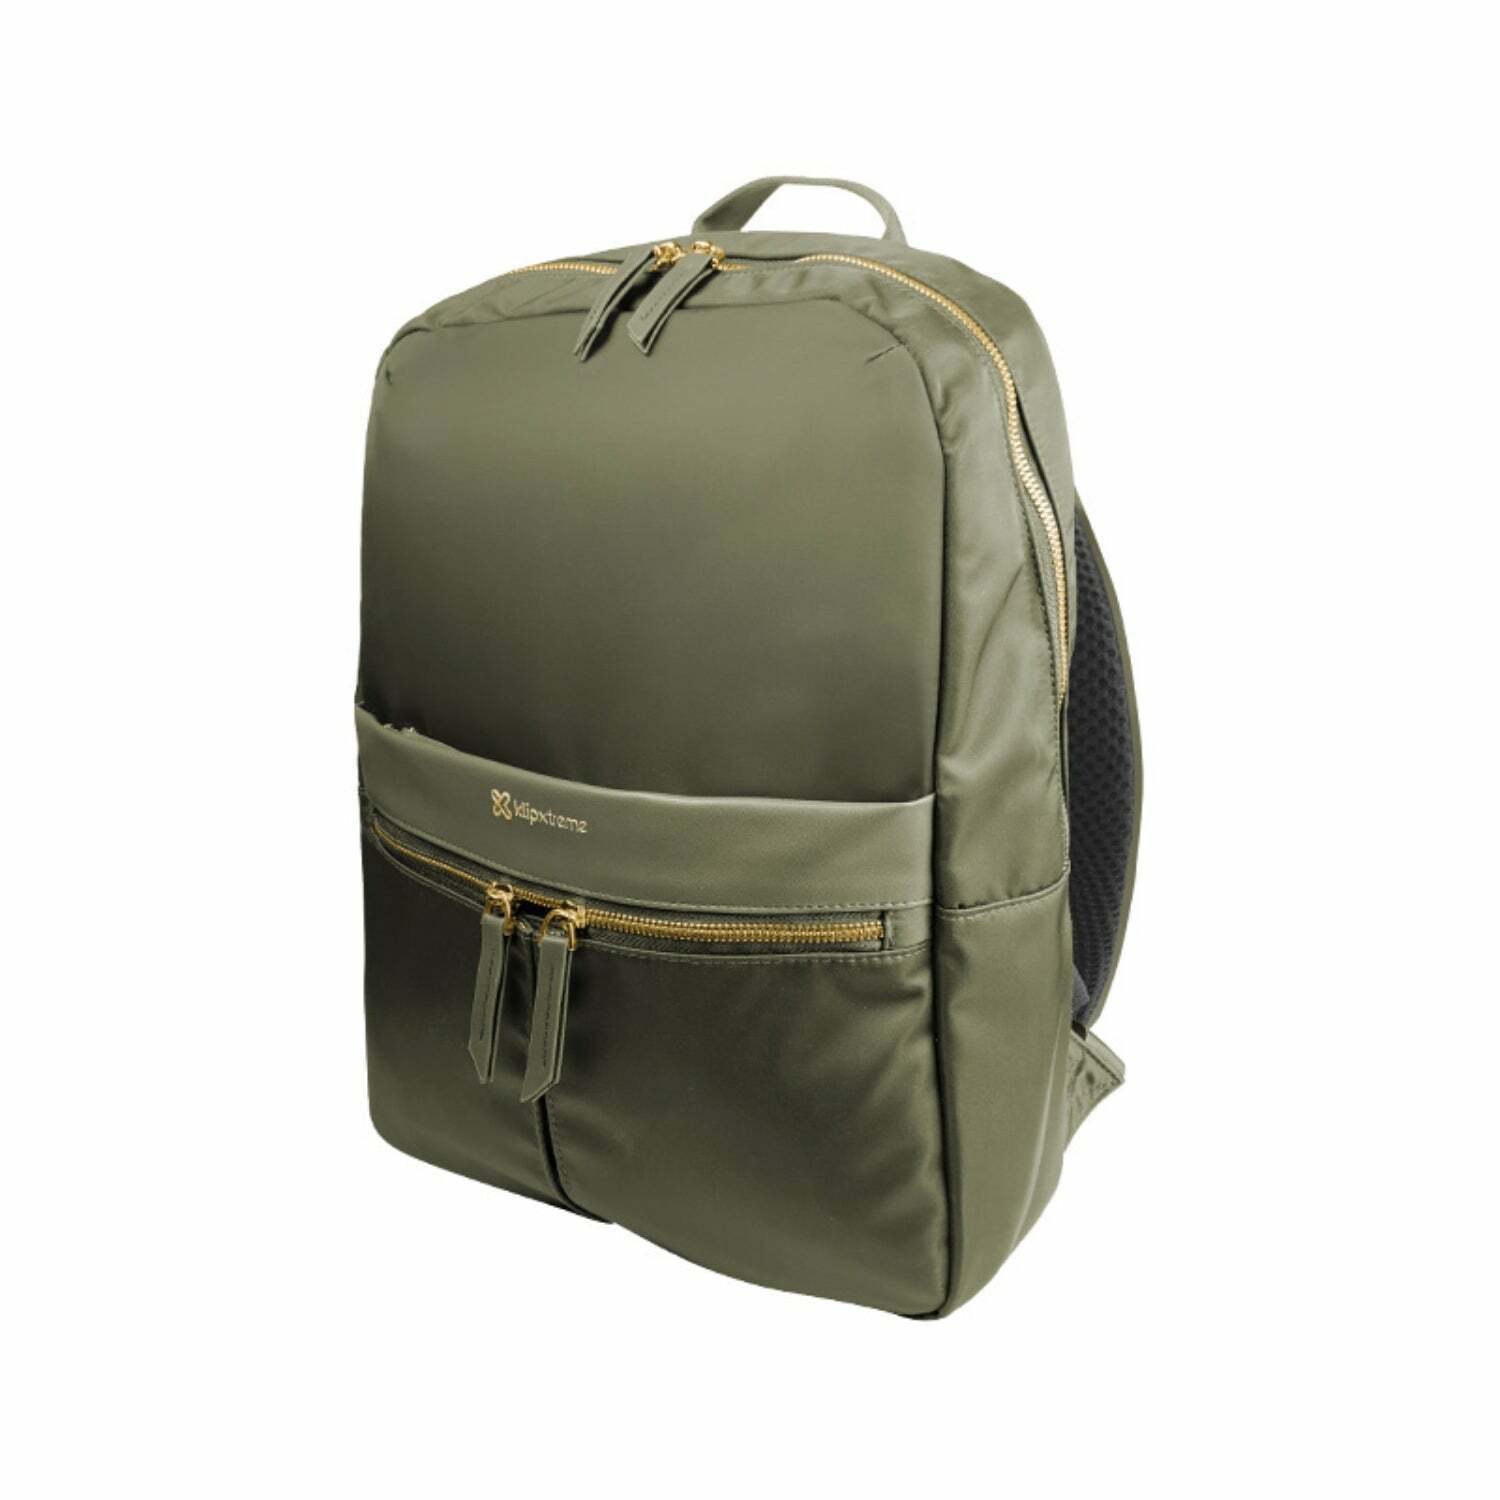 Klip Xtreme - Bari KNB-467 Laptop Backpack, Green